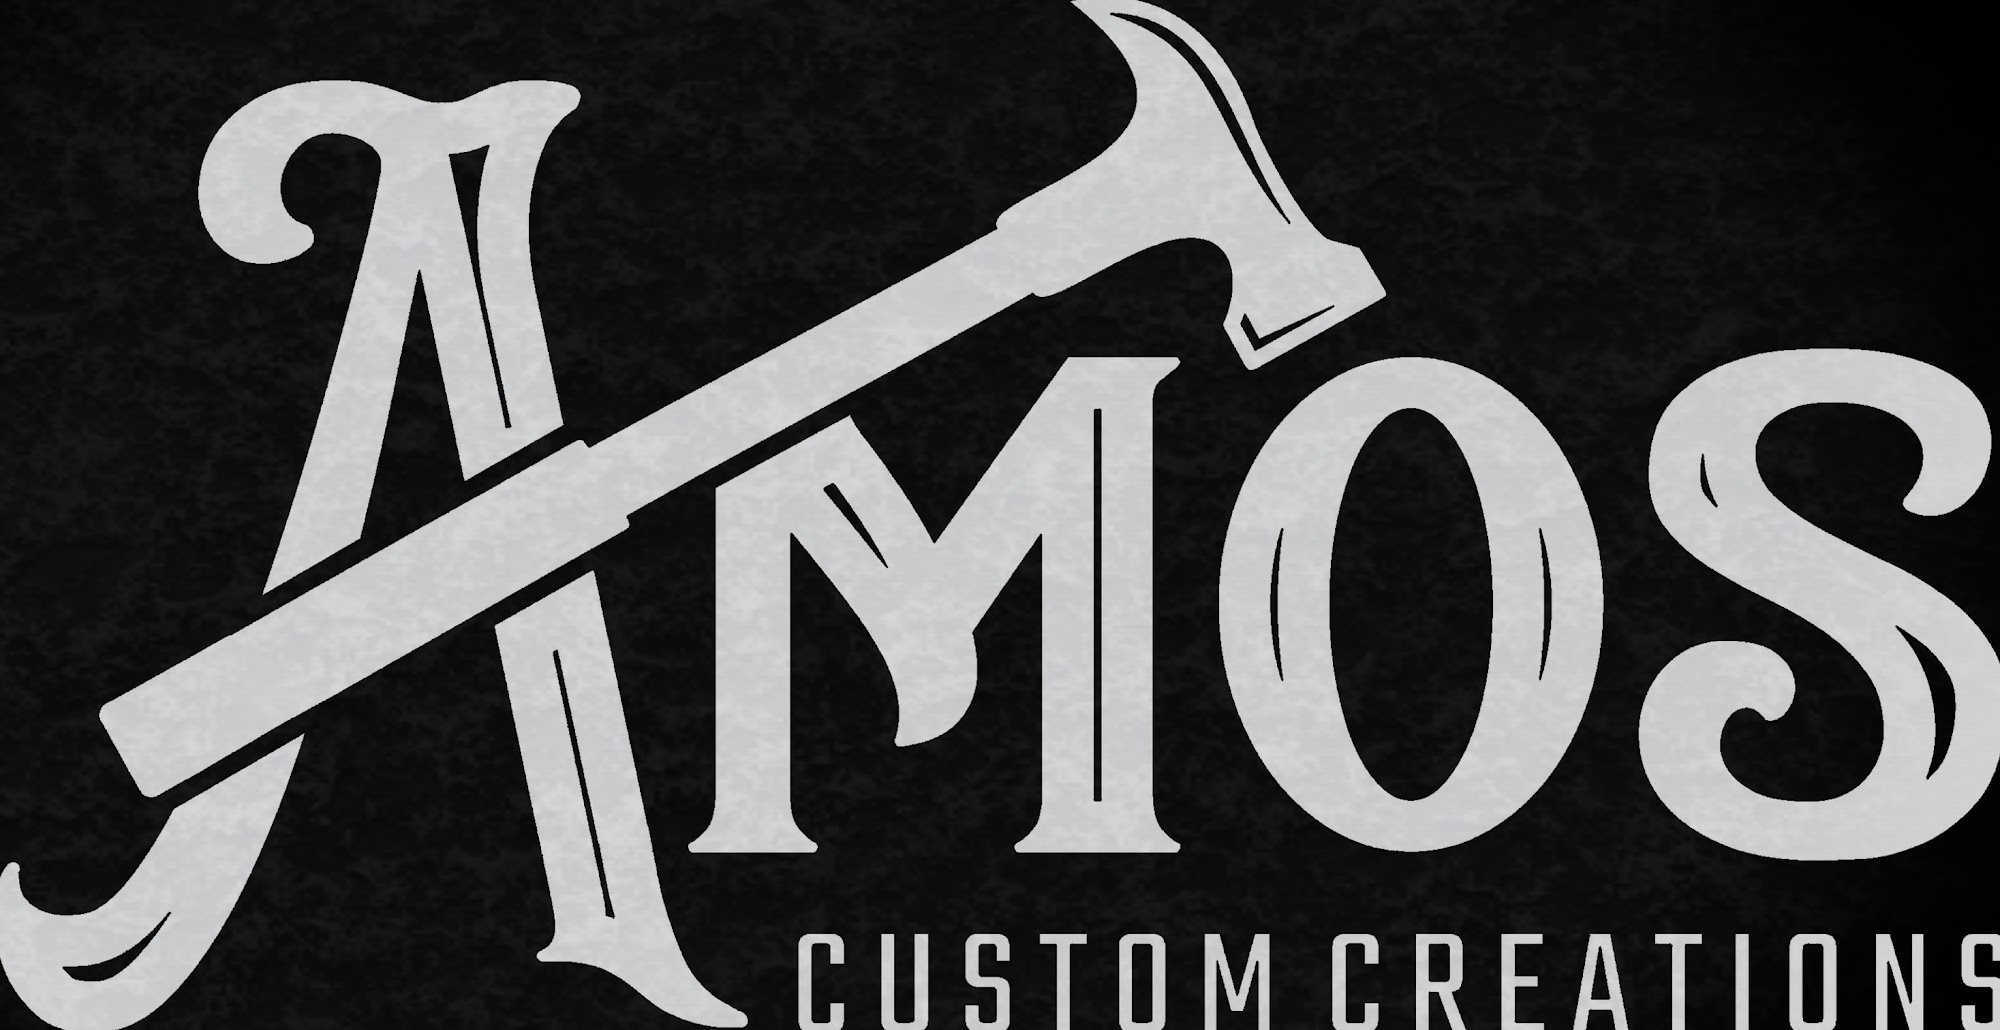 Amos Custom Creations 213 S Central Ave, Marionville Missouri 65705